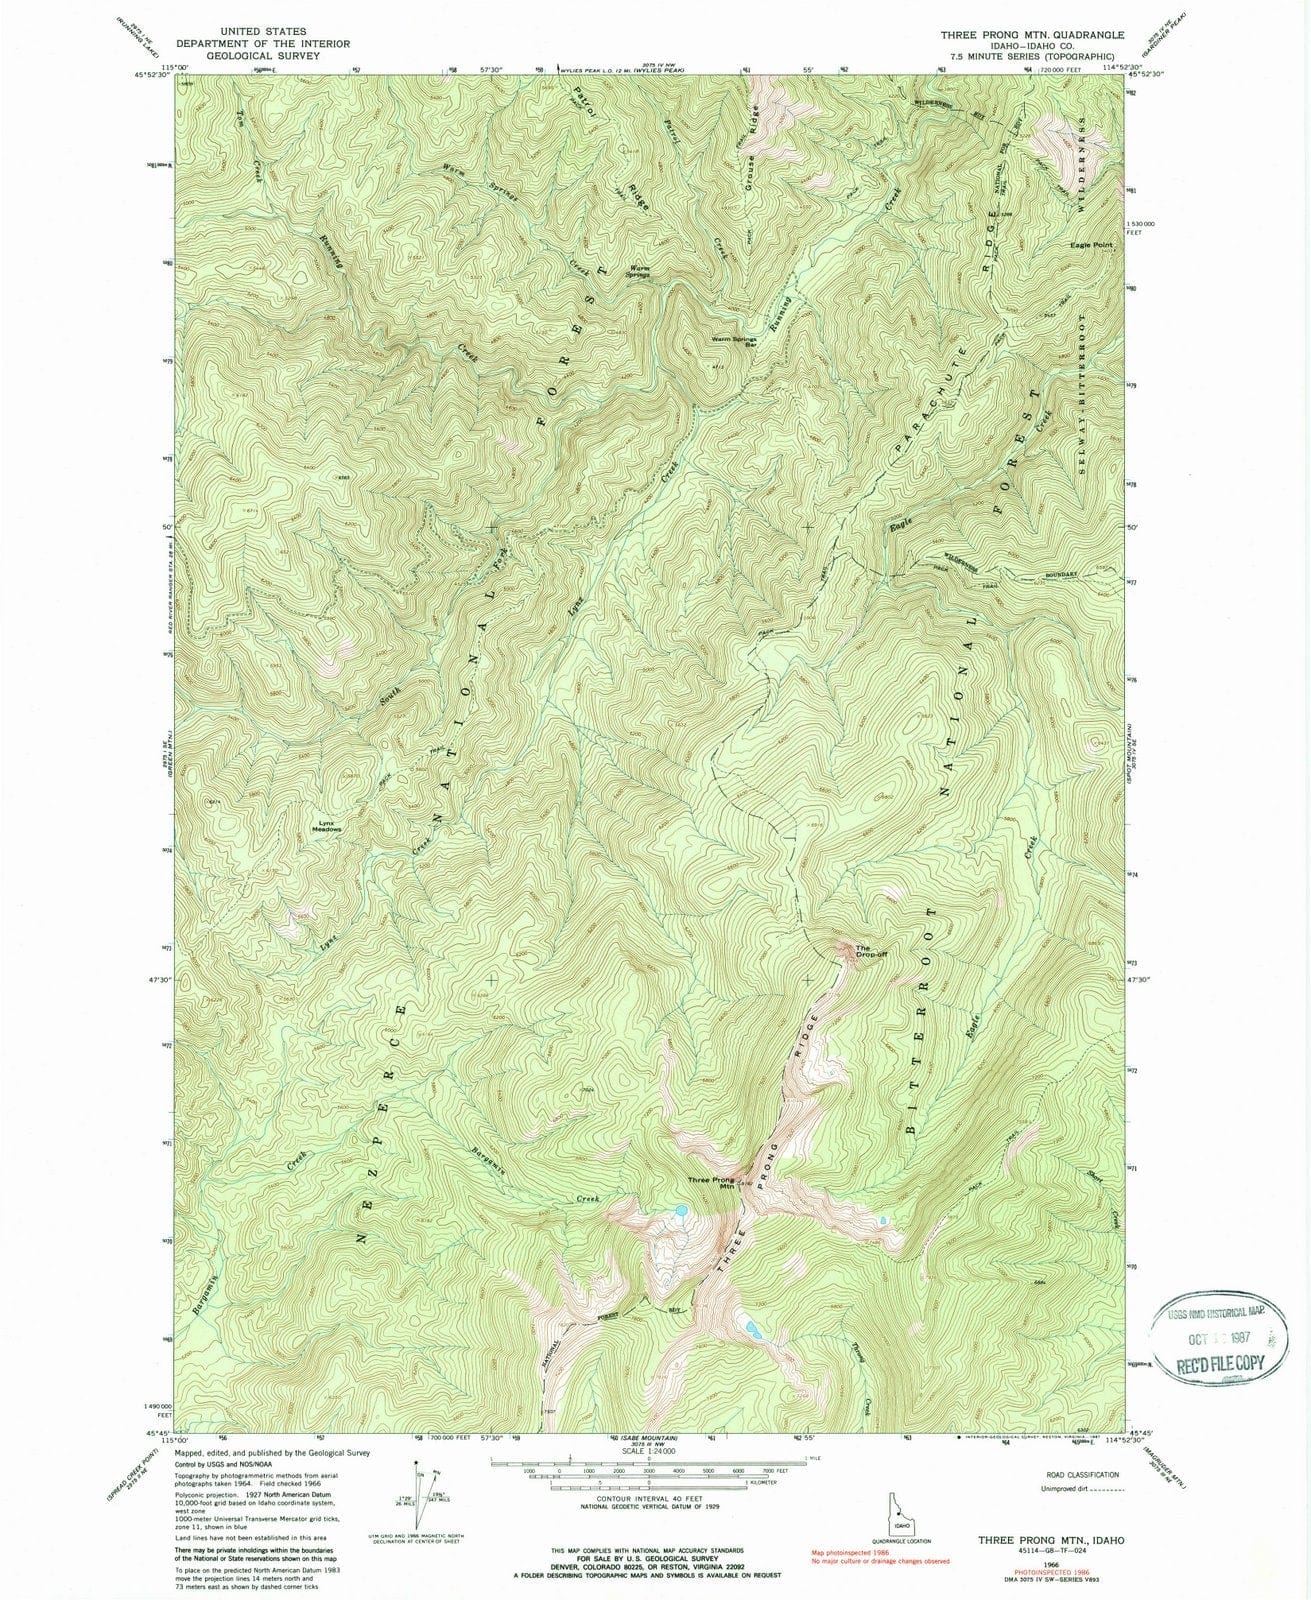 1966 Three Prong Mountain, ID - Idaho - USGS Topographic Map